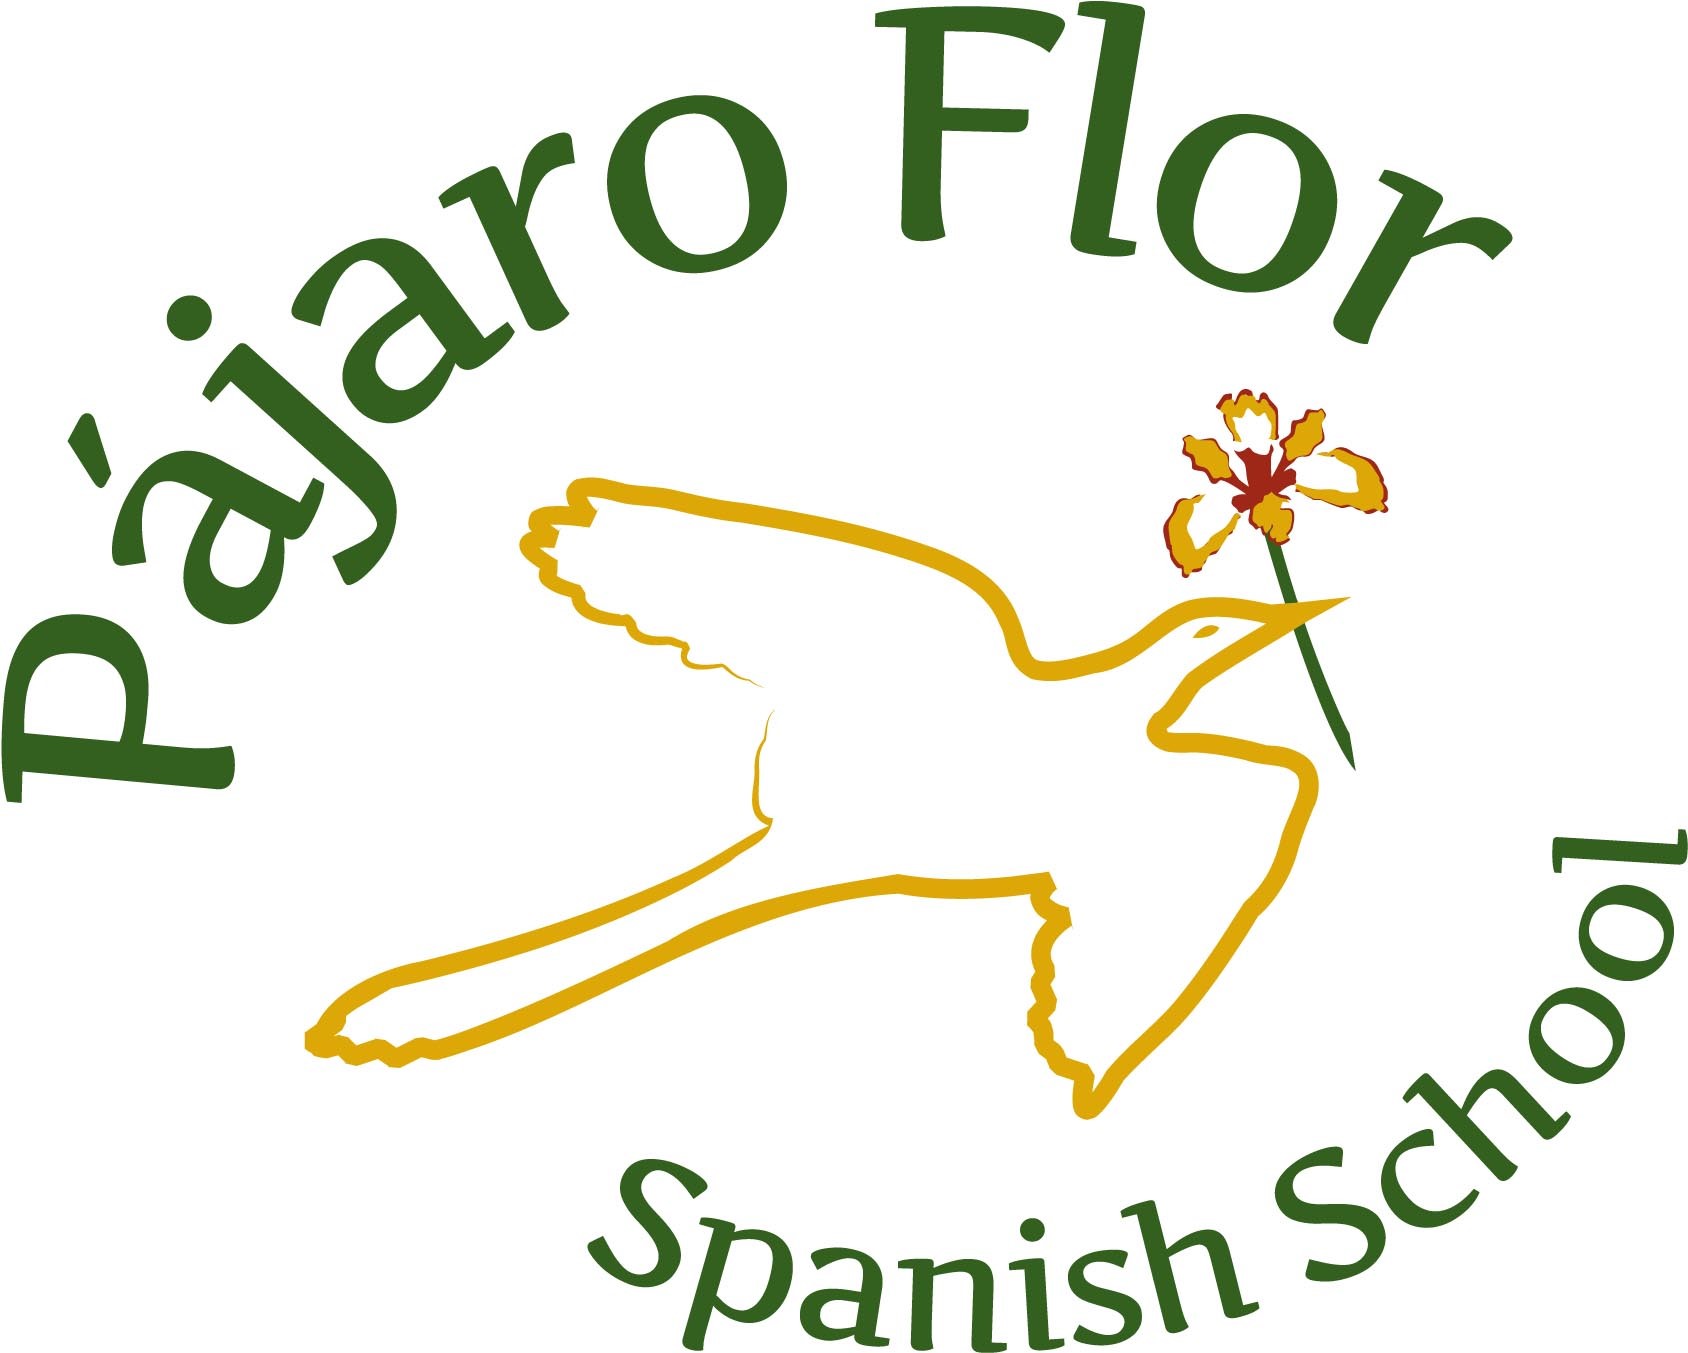 Logo Pajaro Flor